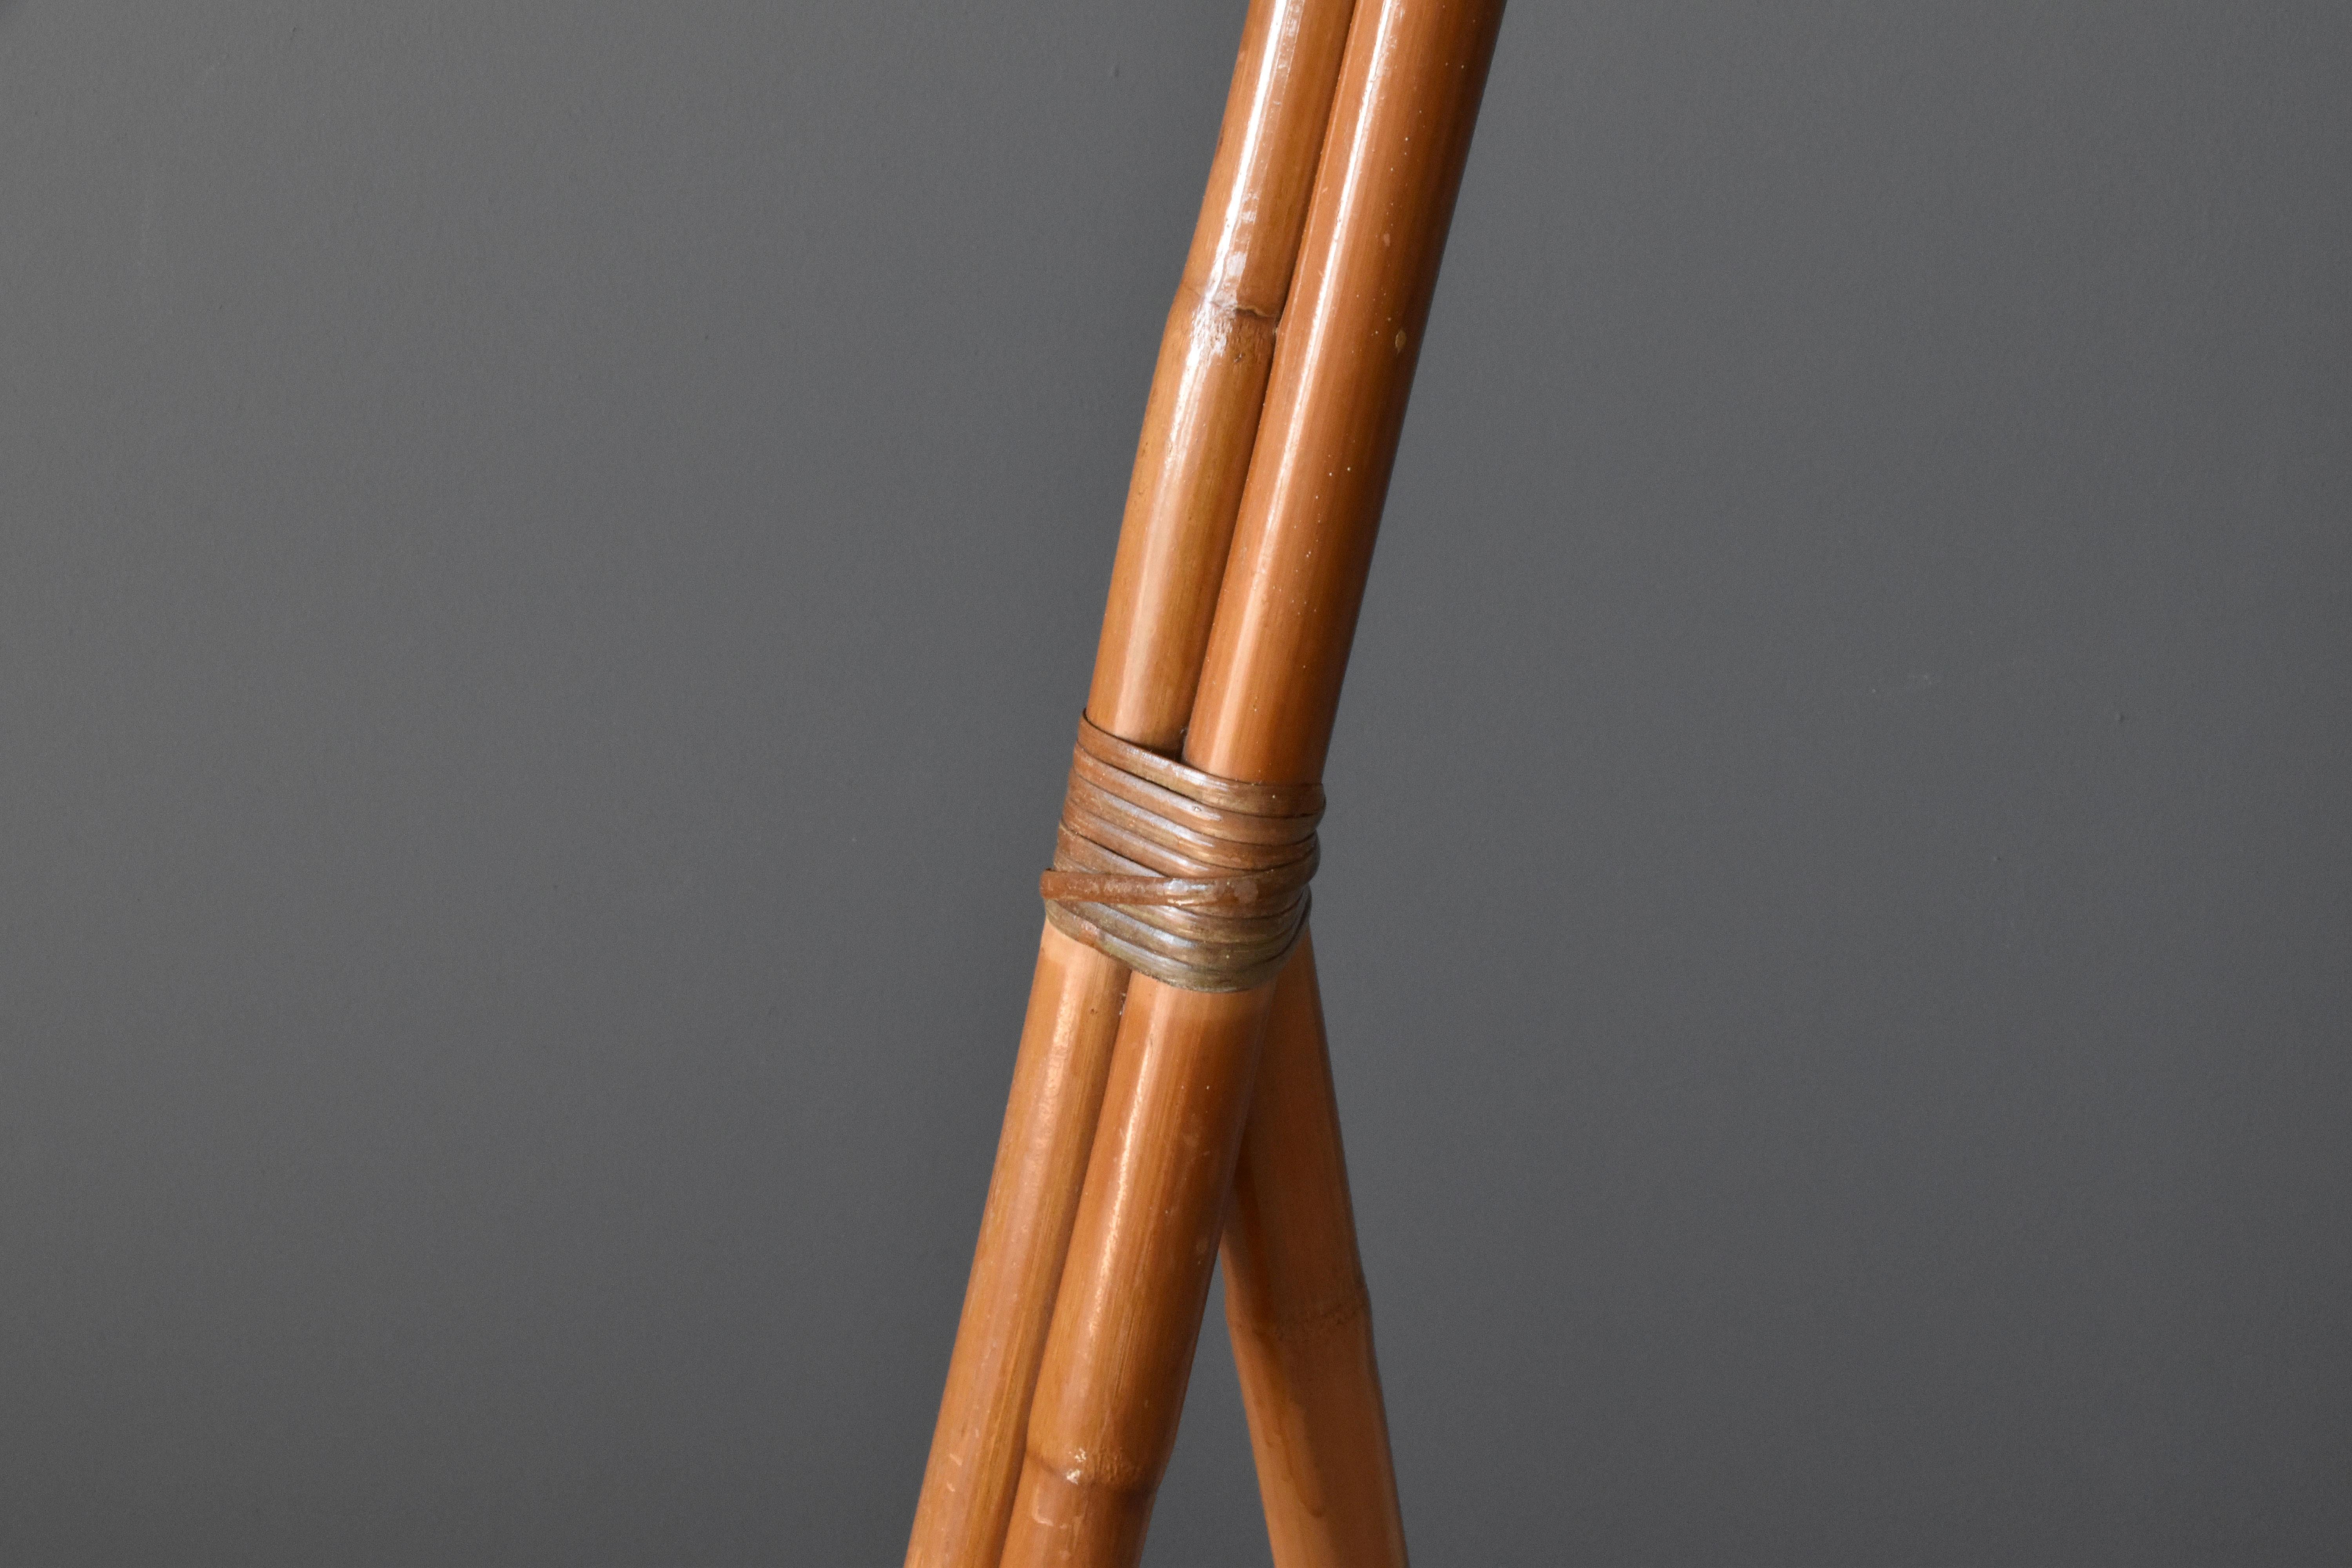 American Modernist Designer, Organic Floor Lamp, Bamboo, Cane, Wood, 1950s 1